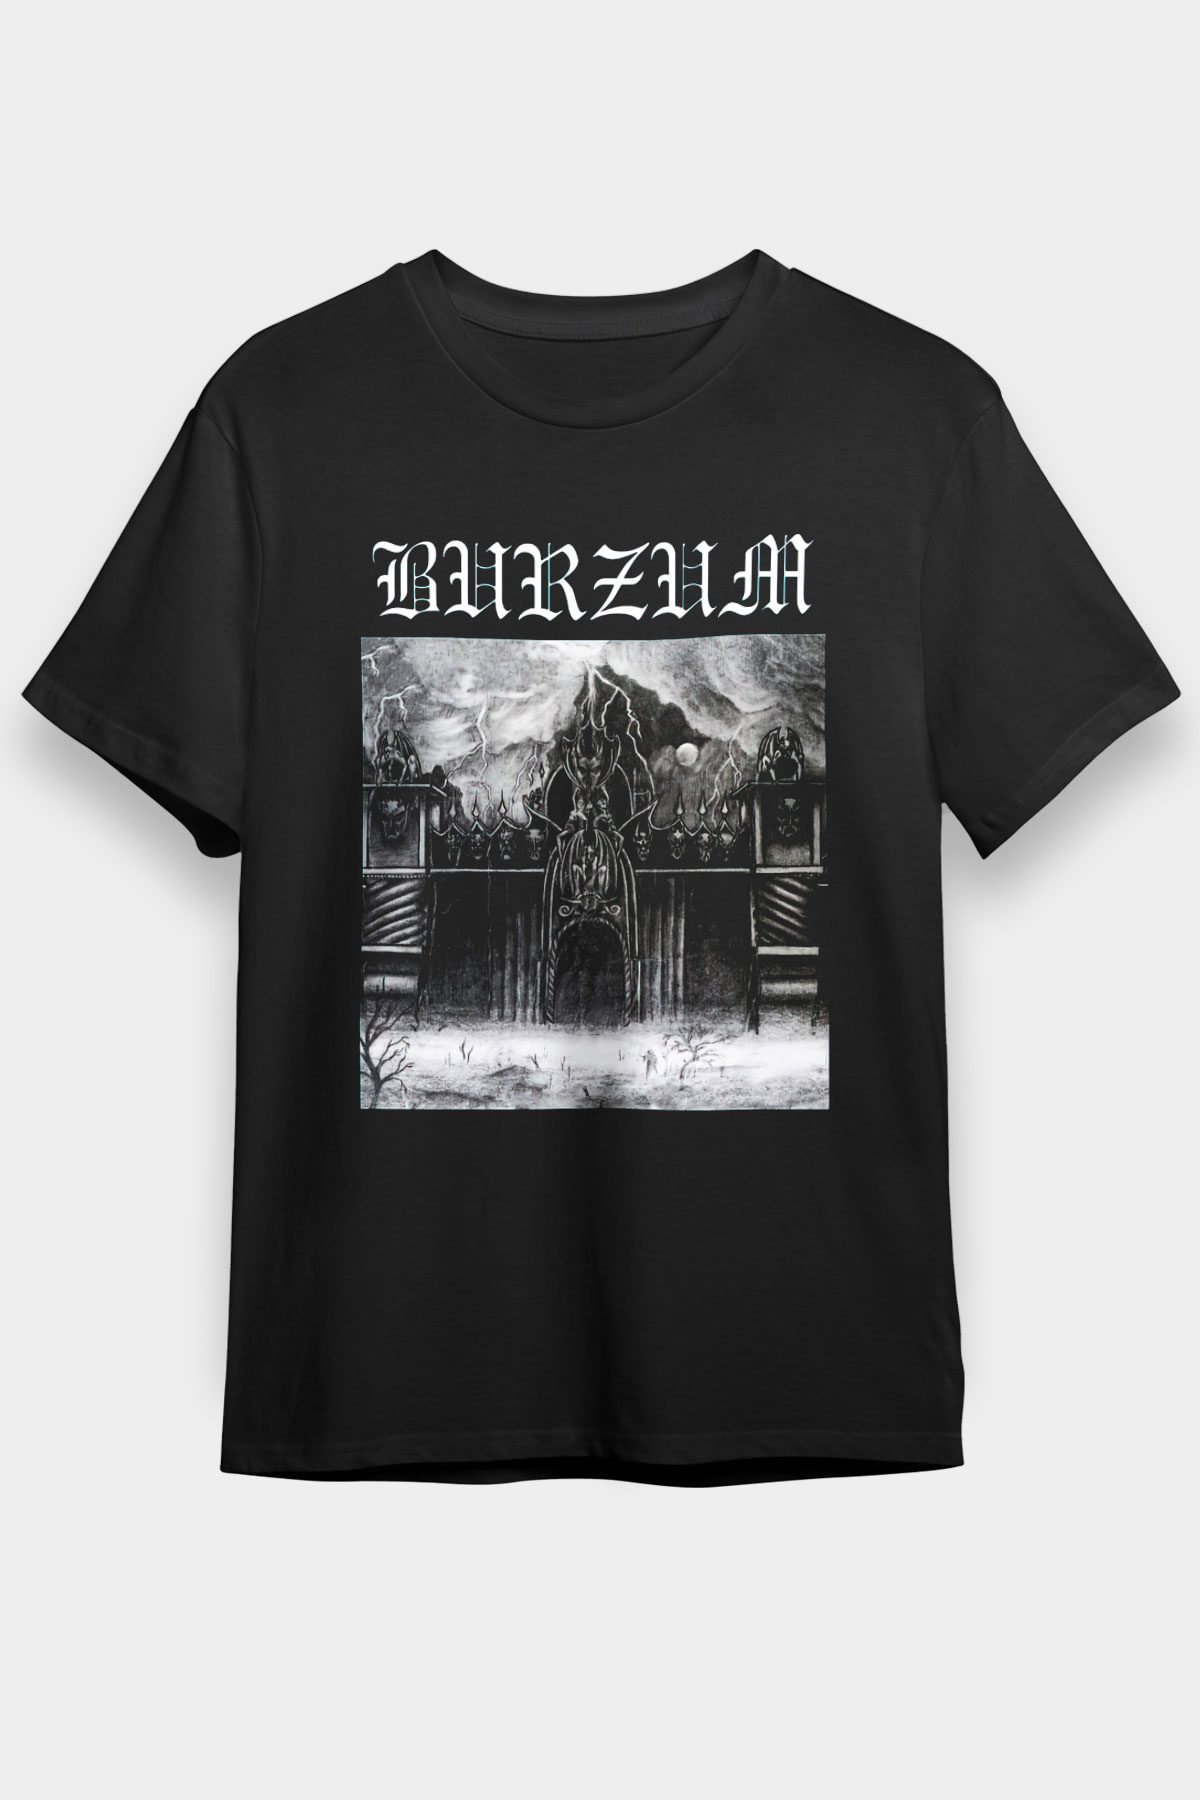 Burzum Black Unisex T-Shirt - Tees - Shirts